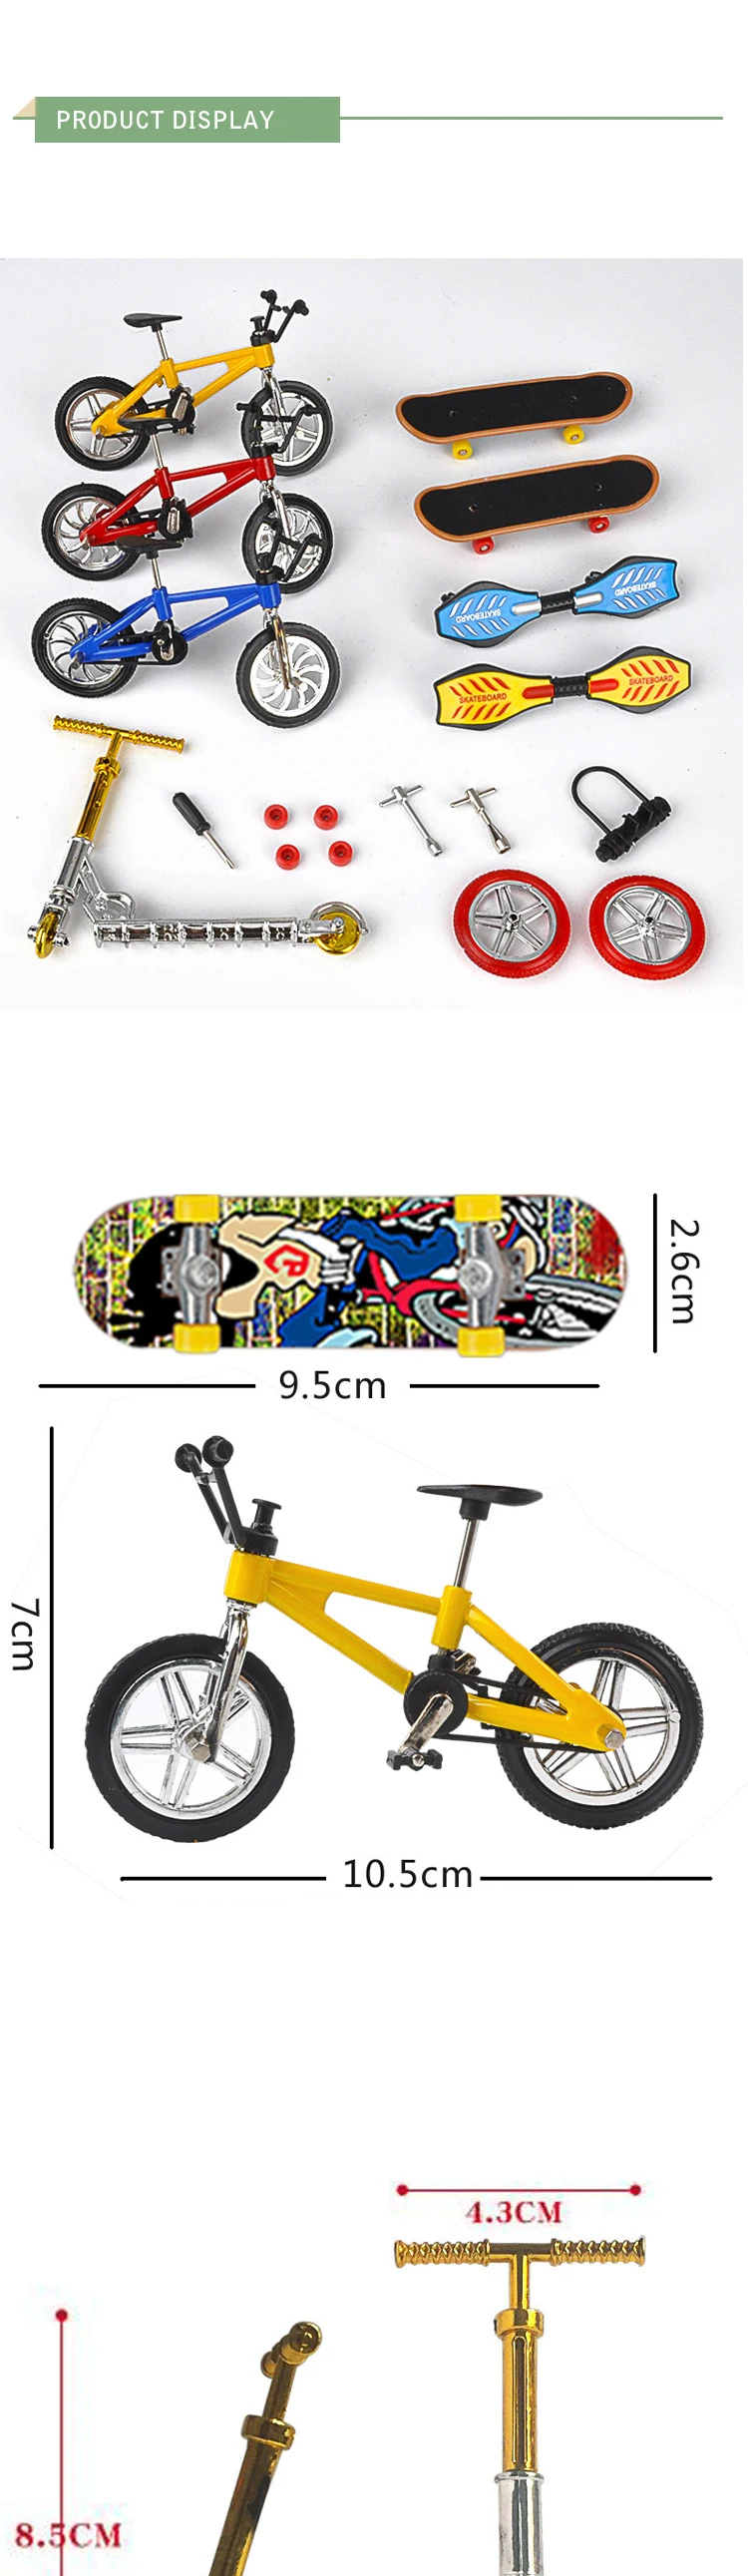 Mini Scooter Child Educational Toy Finger Scooter Bike Fingerboard Skateboard BE 